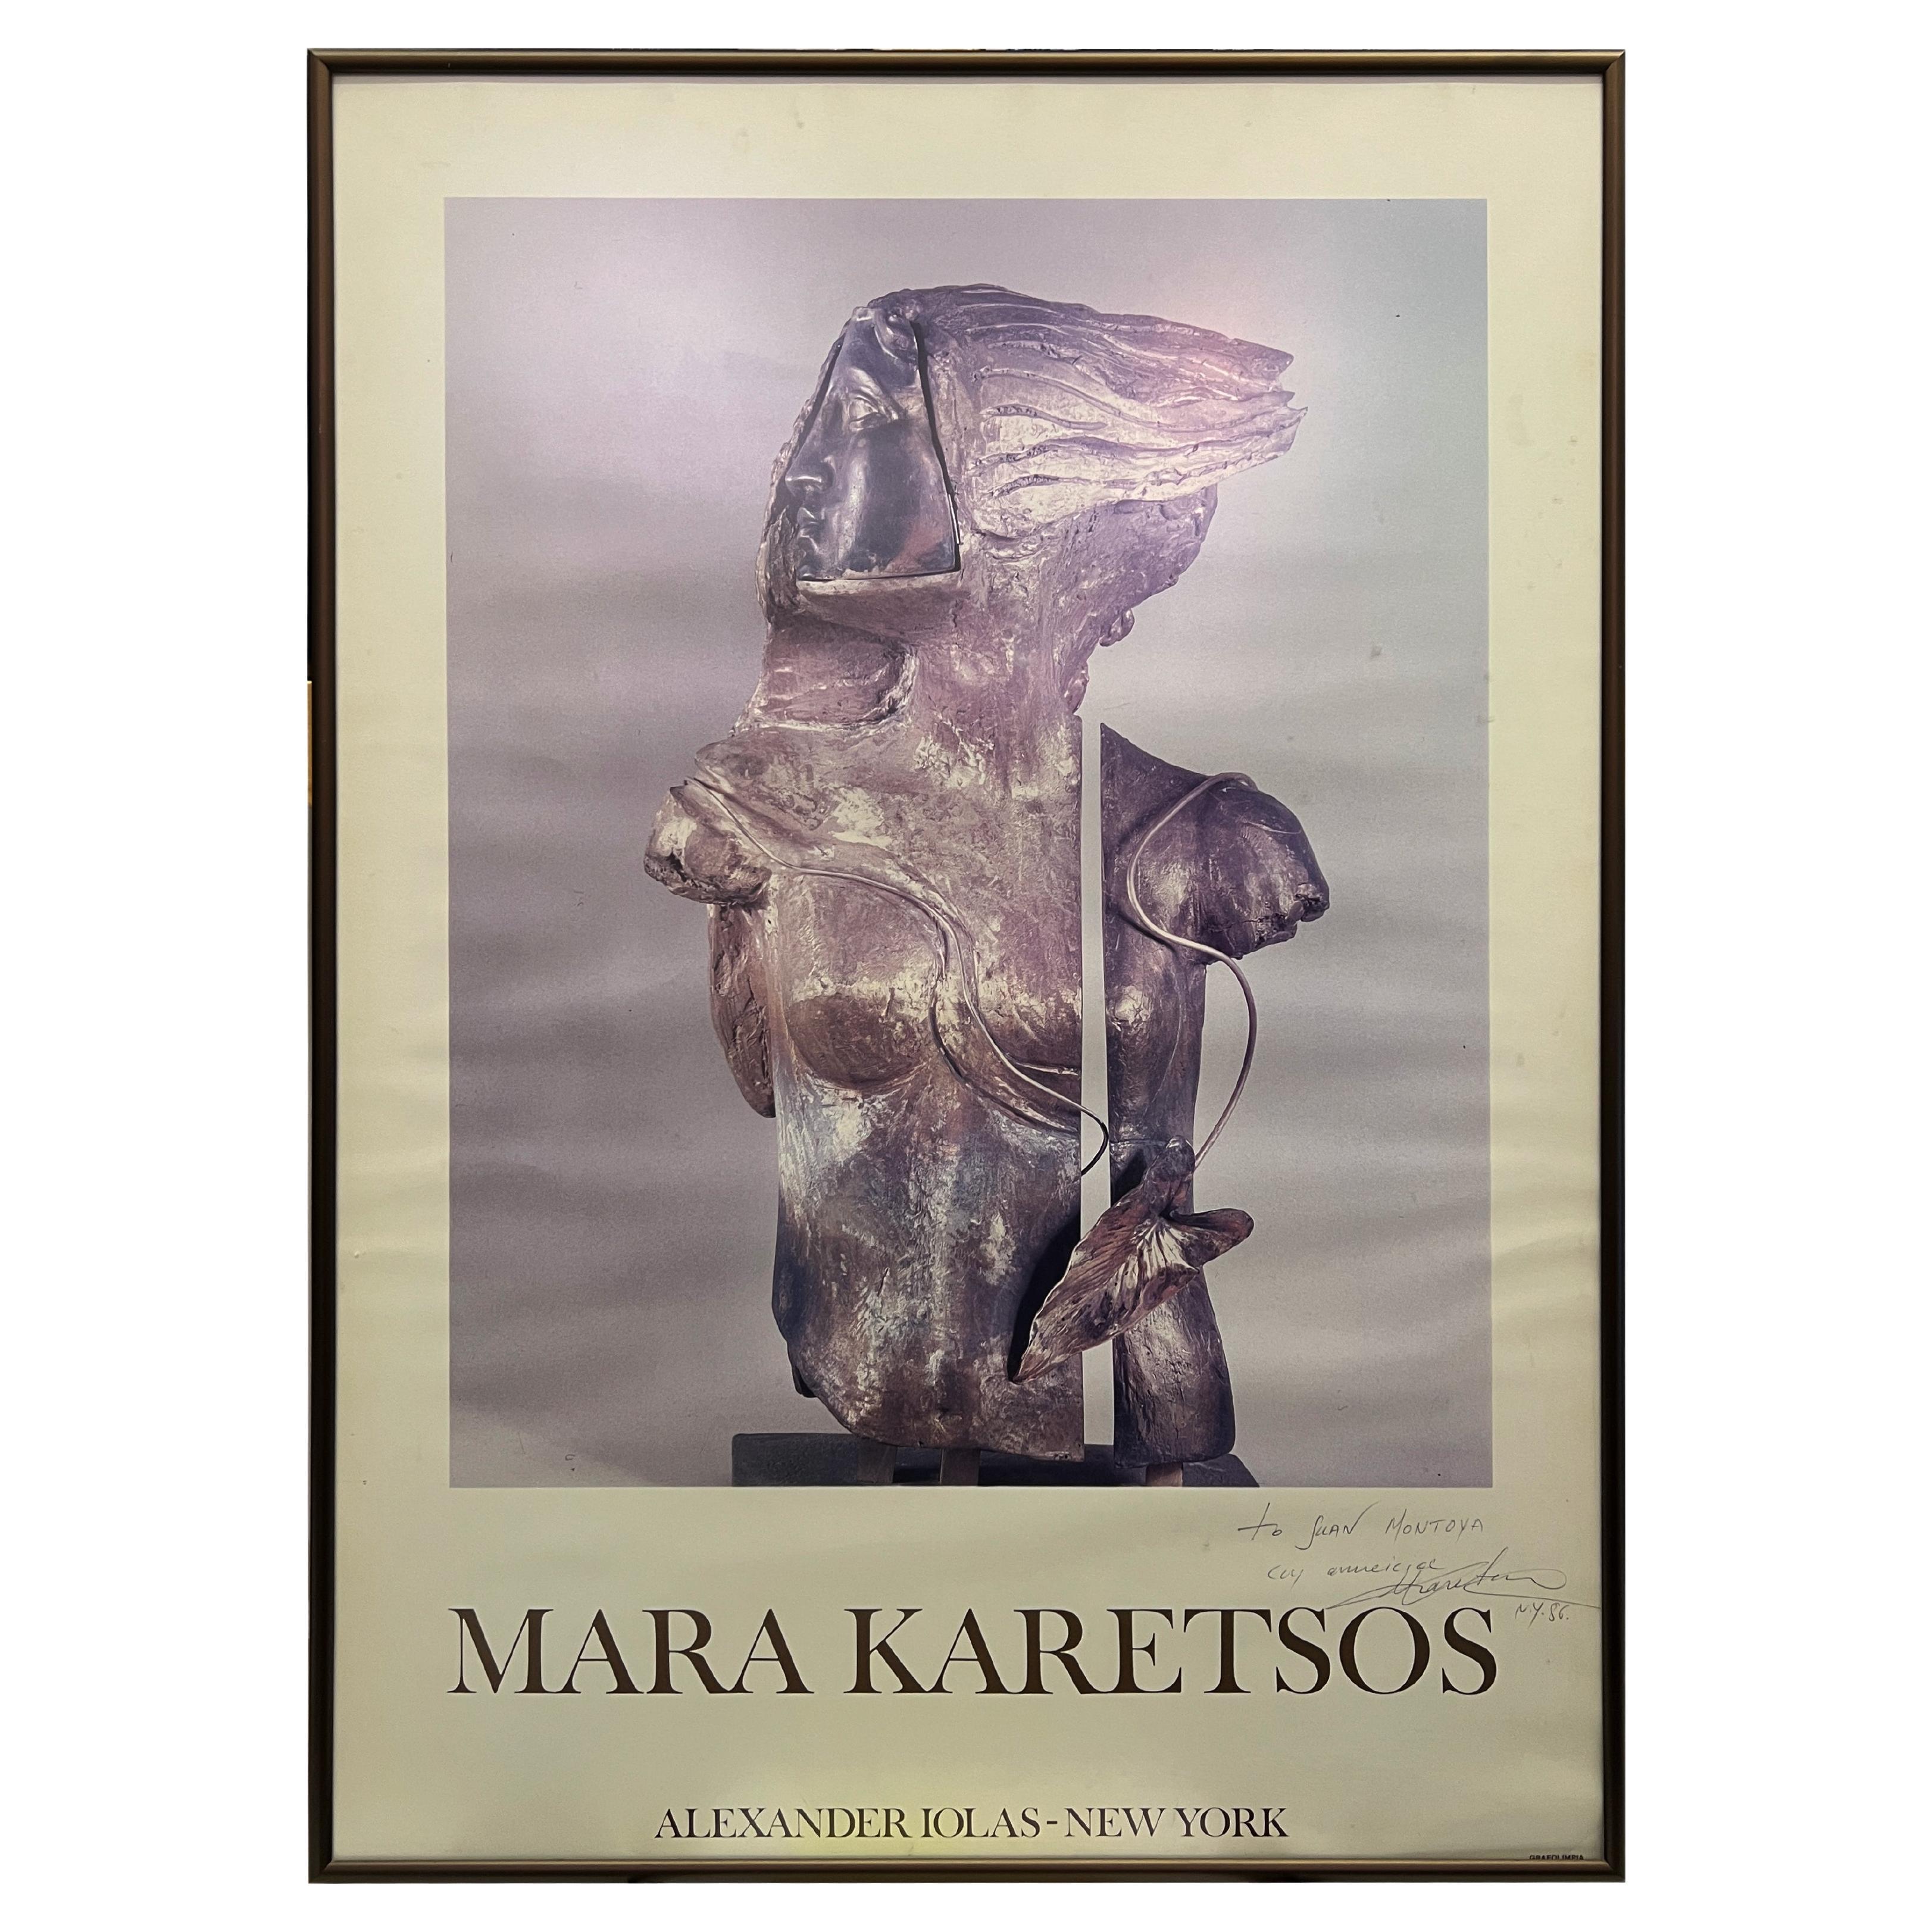 Mara Karetsos 1970s Poster from Galerie Alexandre Iolas